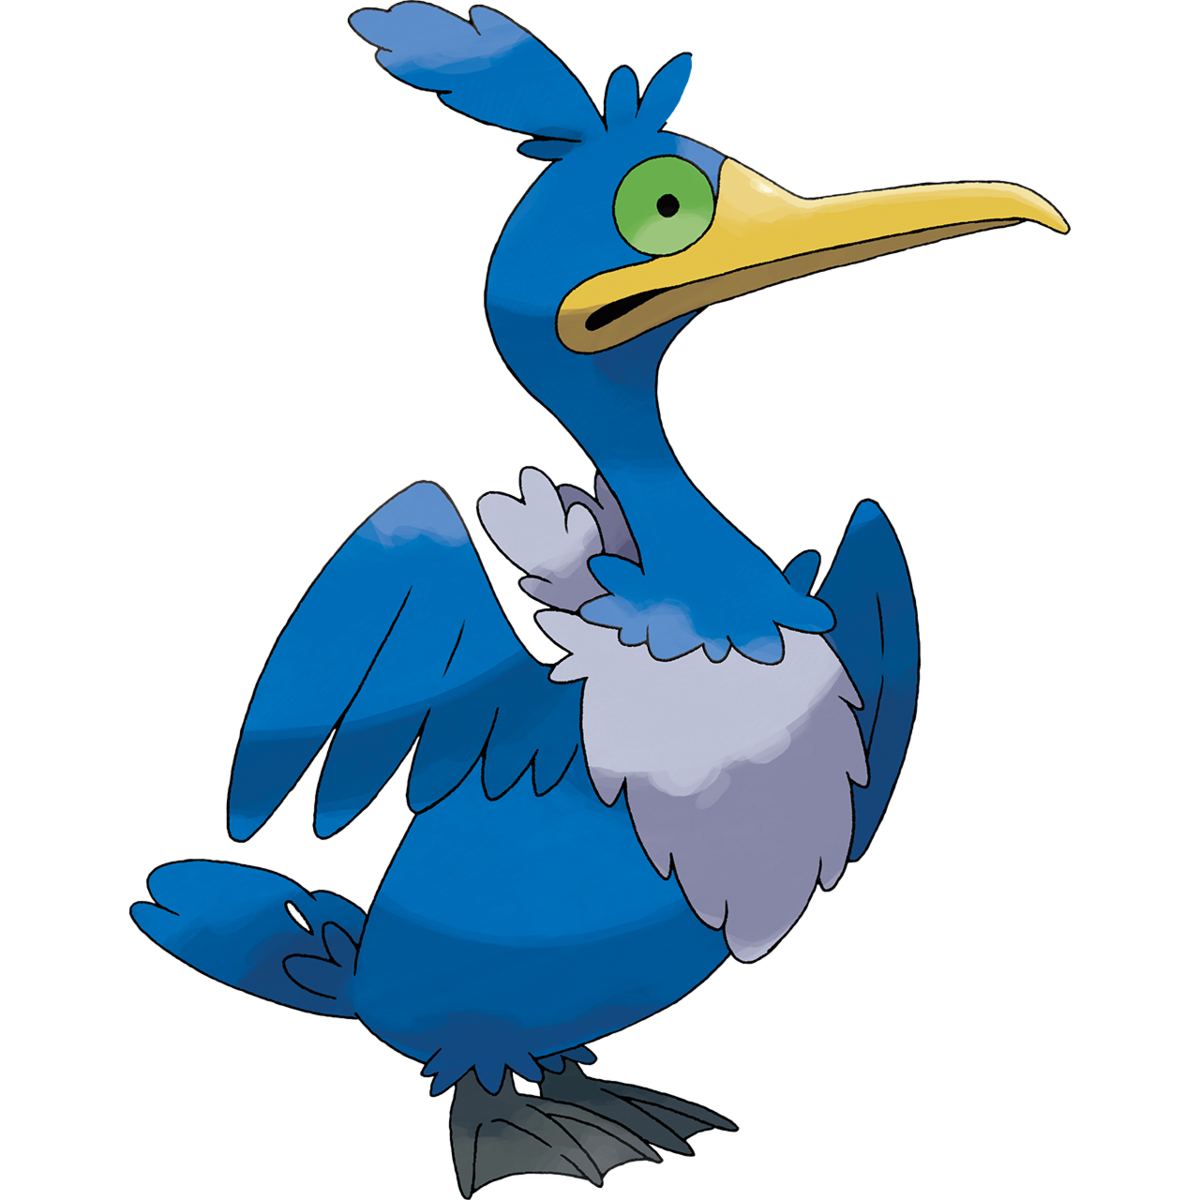 Cramorant Pokemon PNG Image